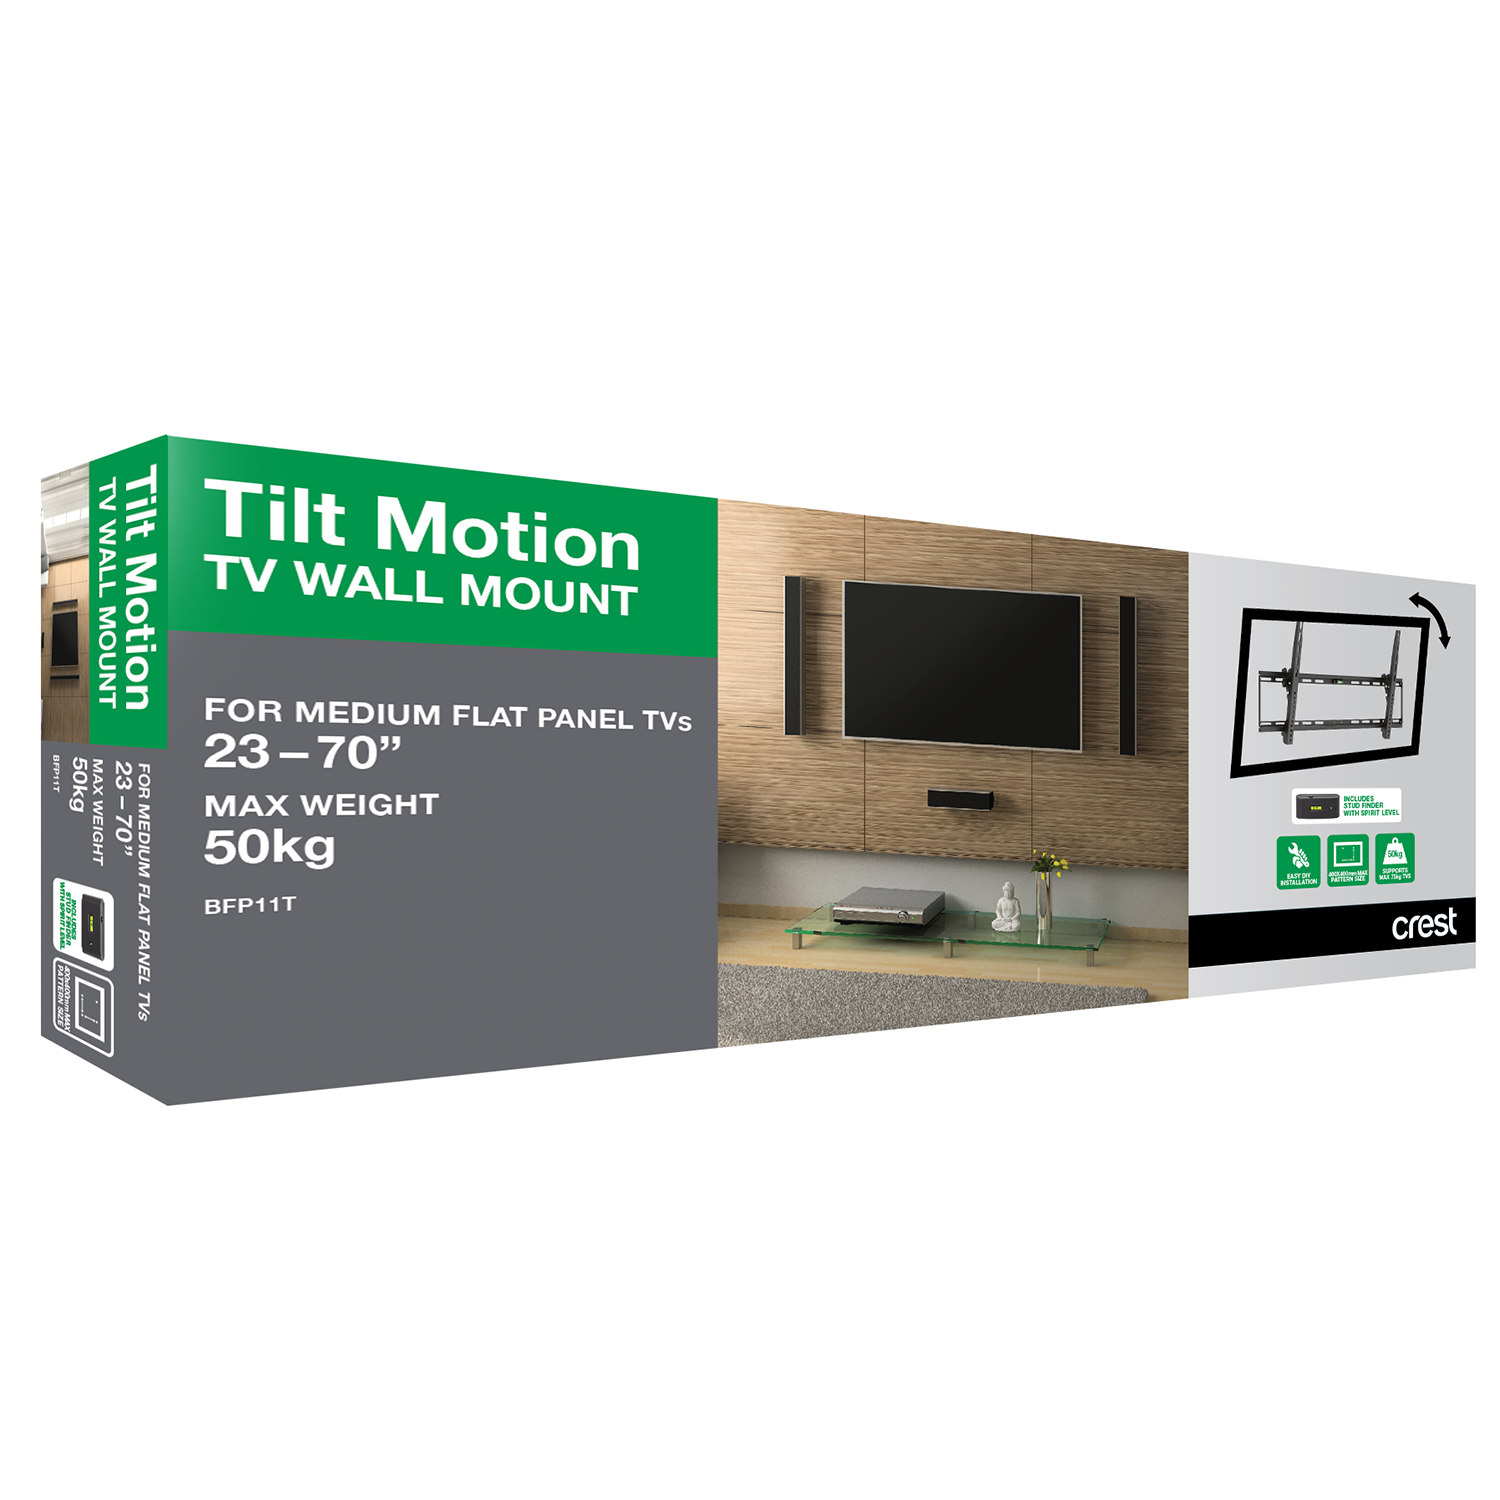 Tilt Action TV Wall Mount- Medium